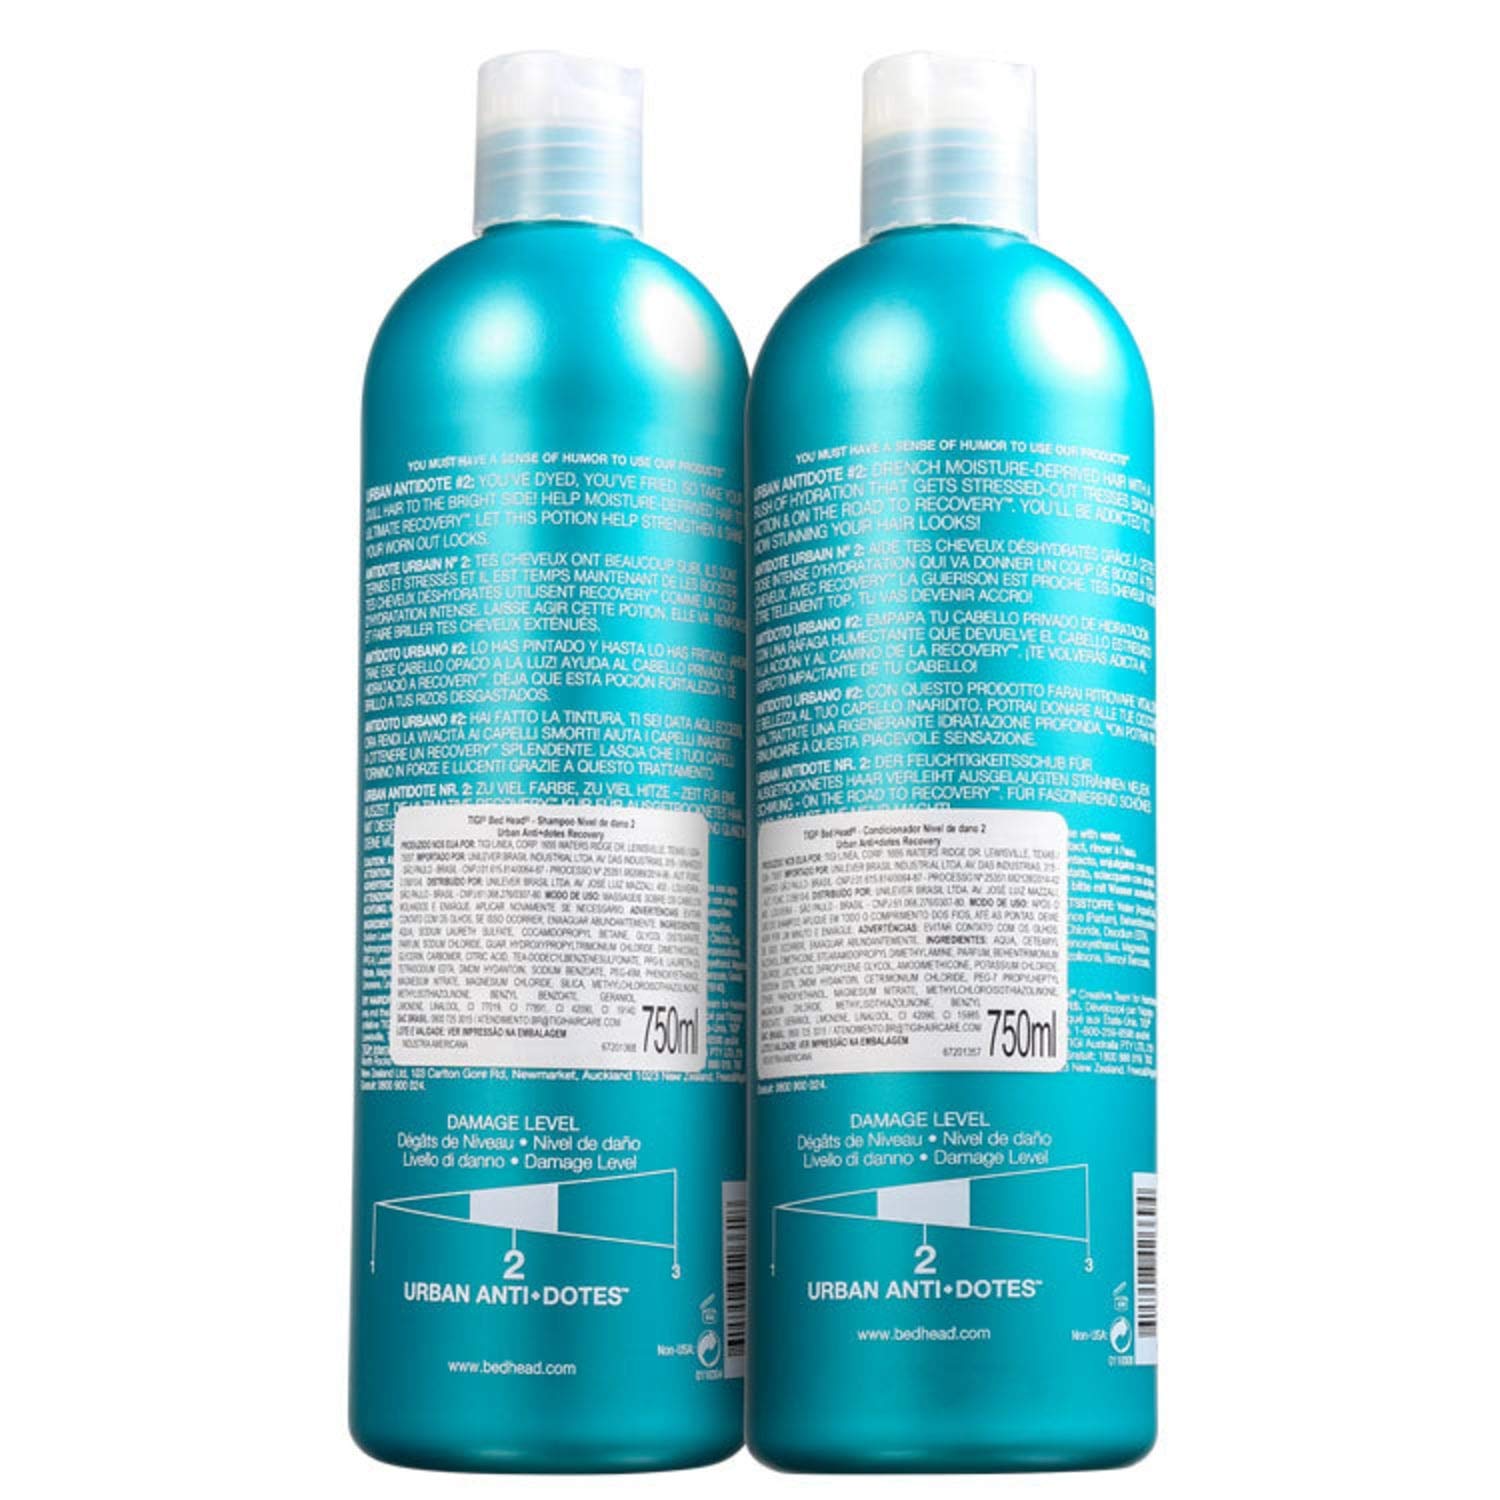 TIGI Bed Head Urban Anti-dote PFZoVz Recovery Shampoo & Conditioner Duo Damage Level 2, 25.36 Oz, 2 Units